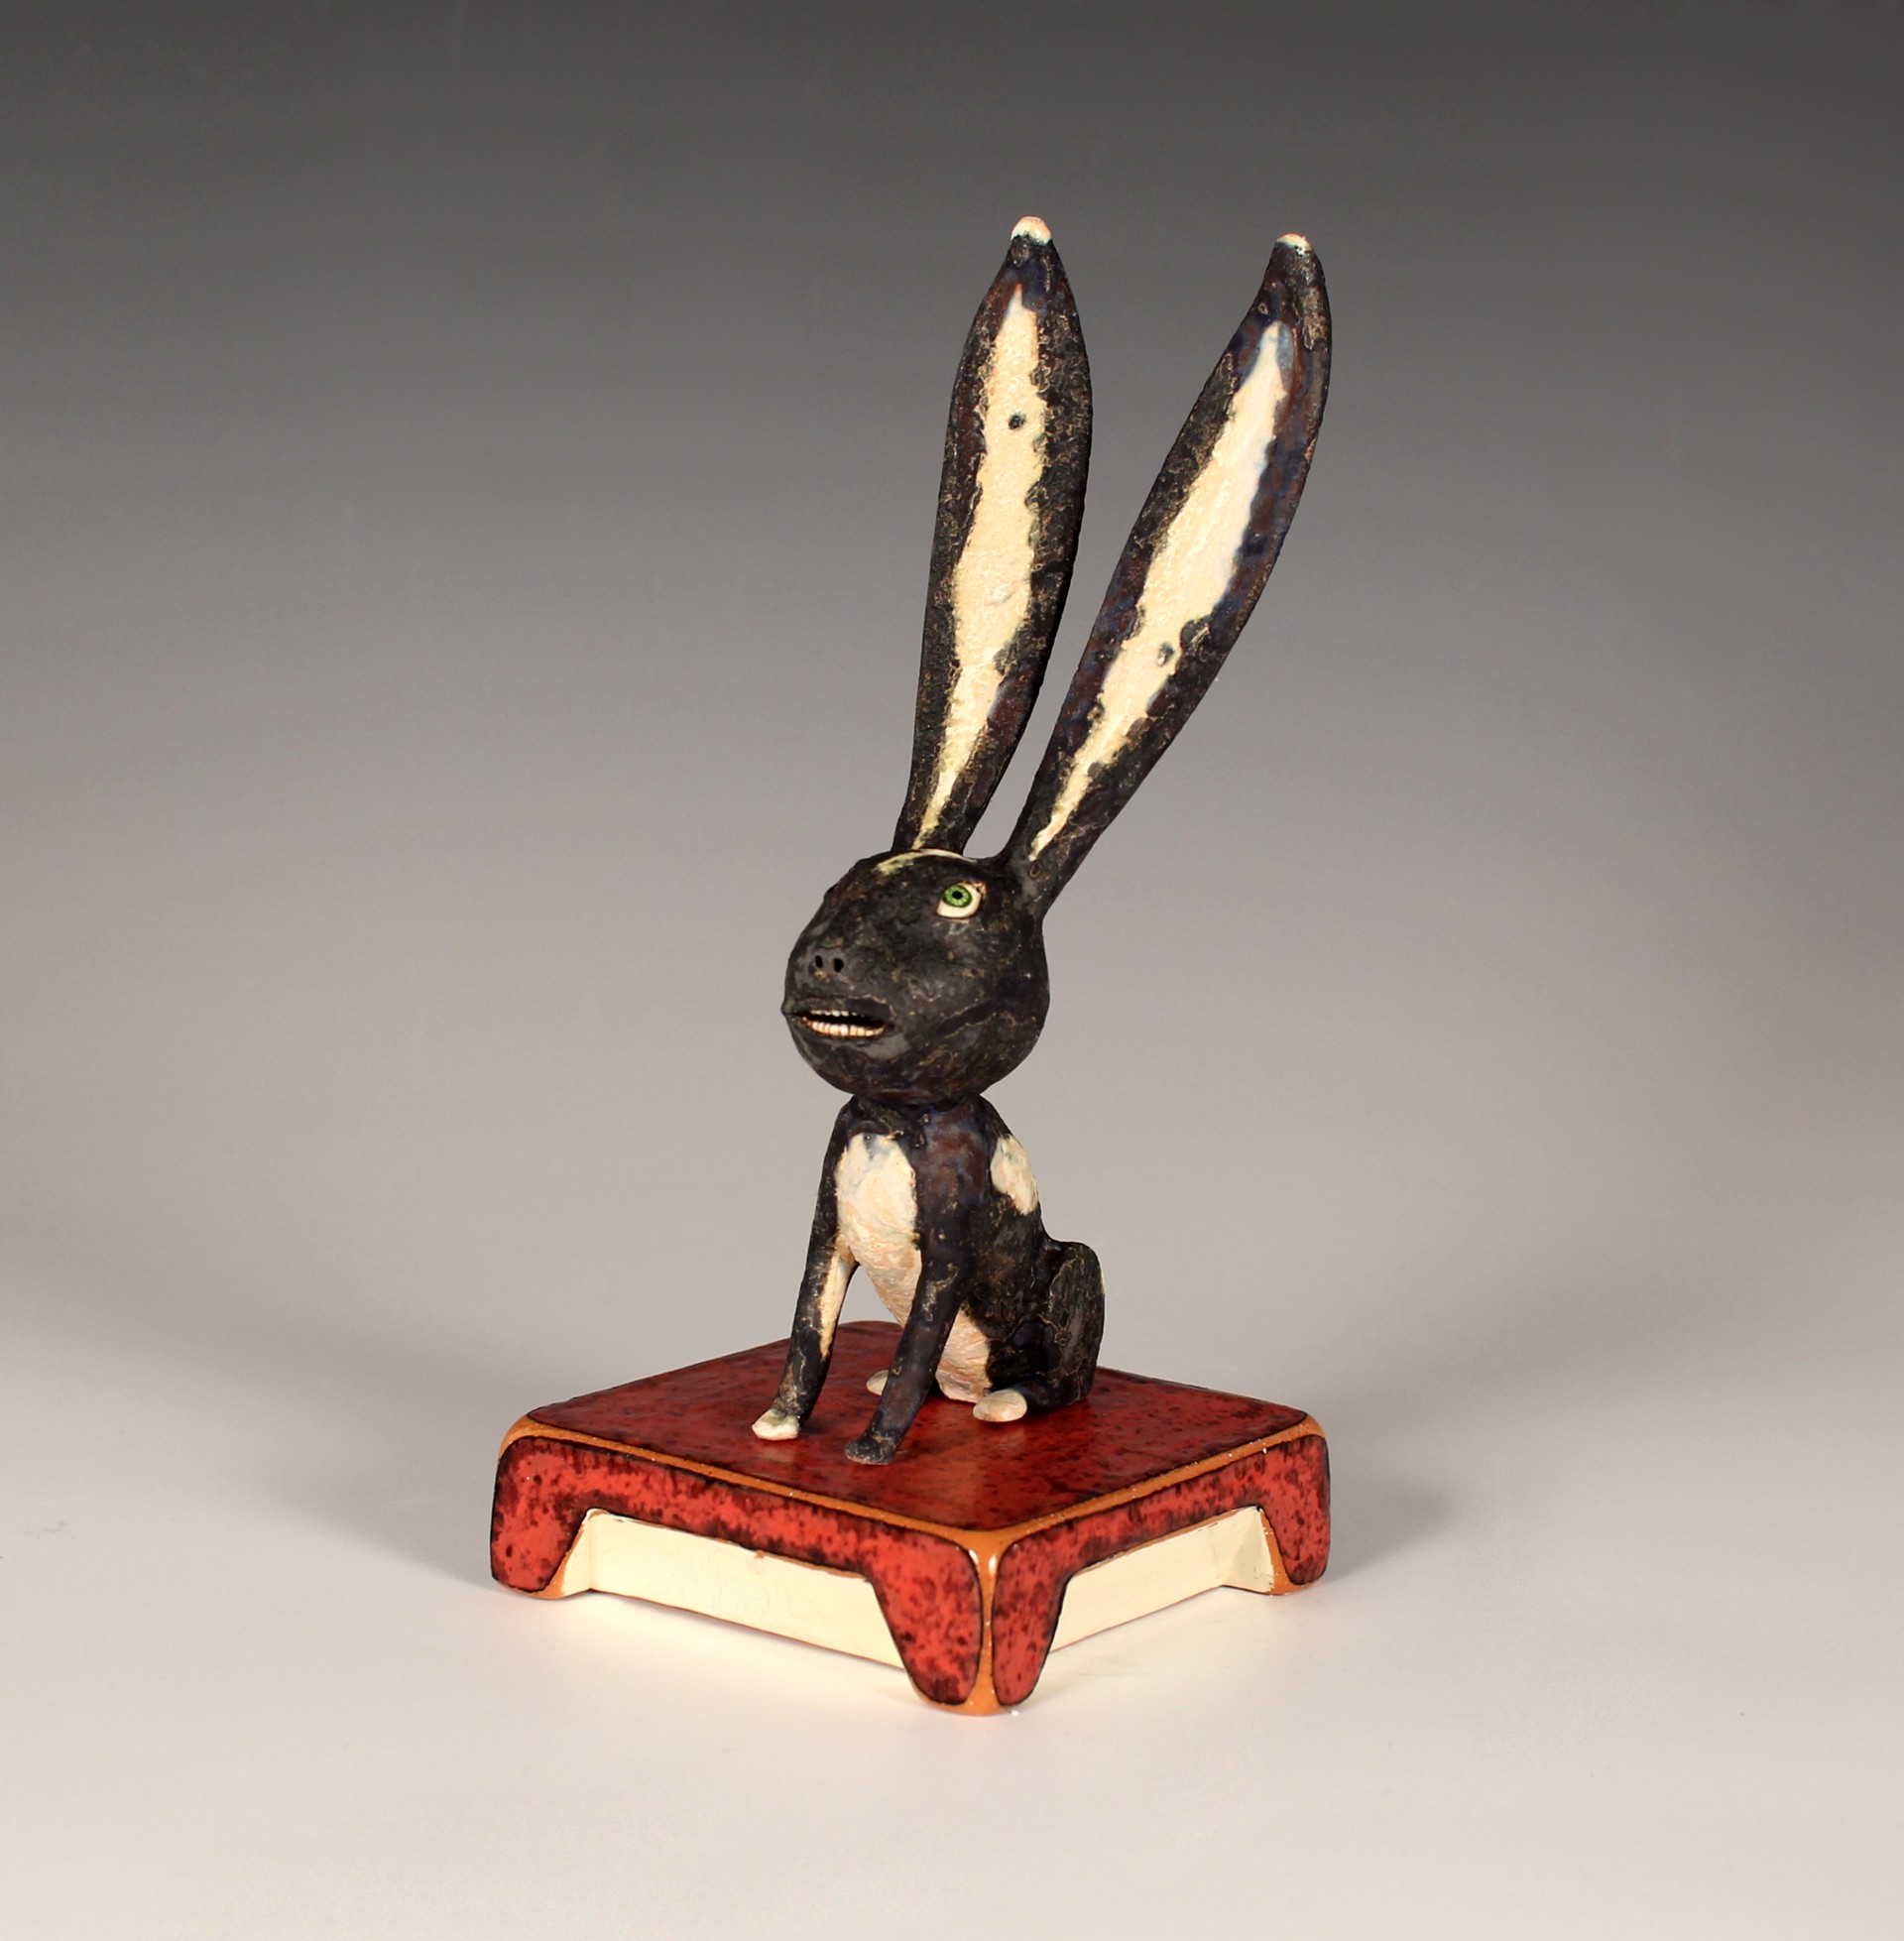 Black Rabbit by Wesley Anderegg